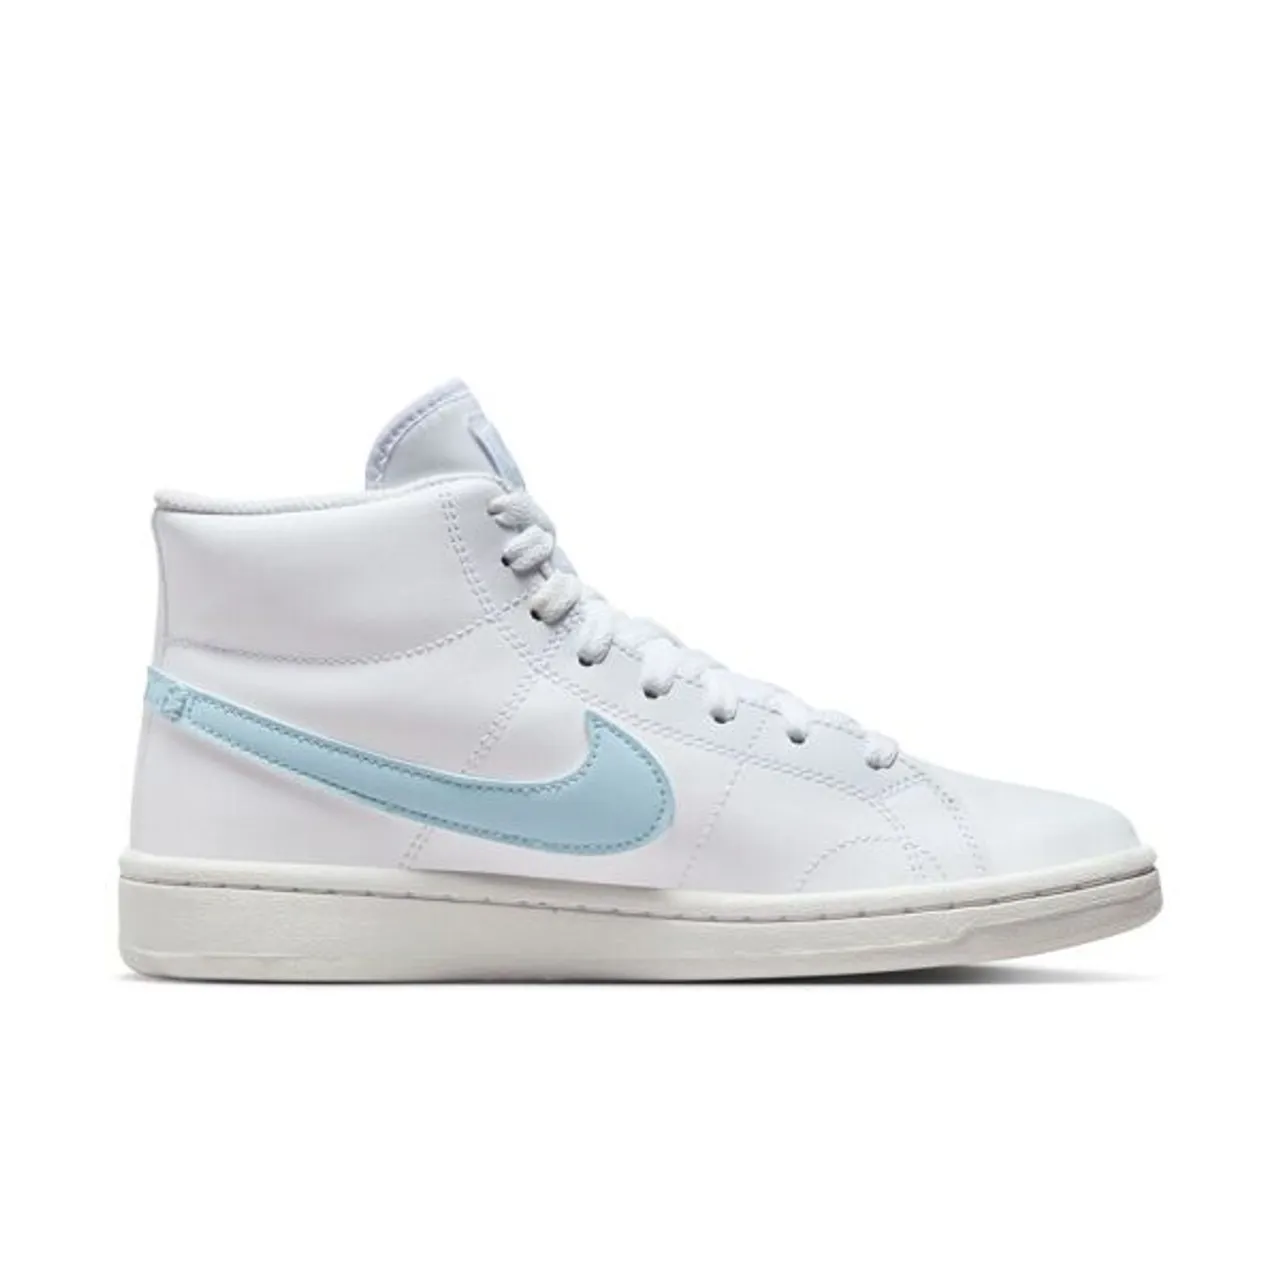 Sneaker NIKE SPORTSWEAR "COURT ROYALE 2 MID" Gr. 38, weiß (weiß, blau) Schuhe Schnürstiefeletten